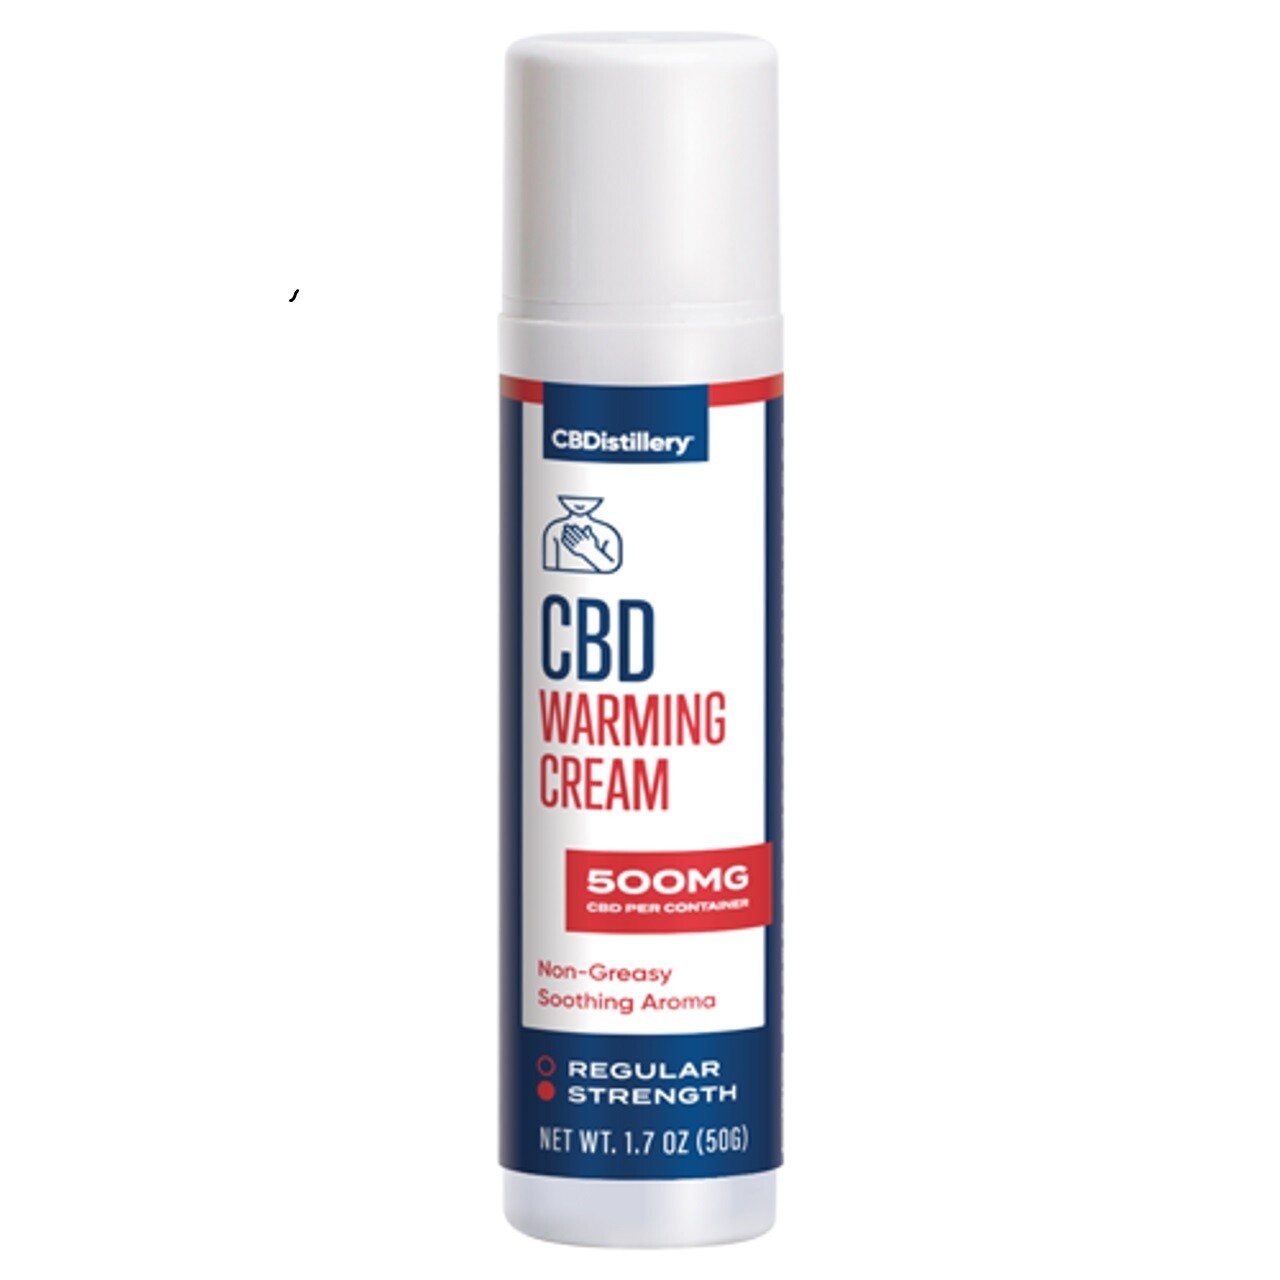 CBDistillery Warming Cream (500MG)